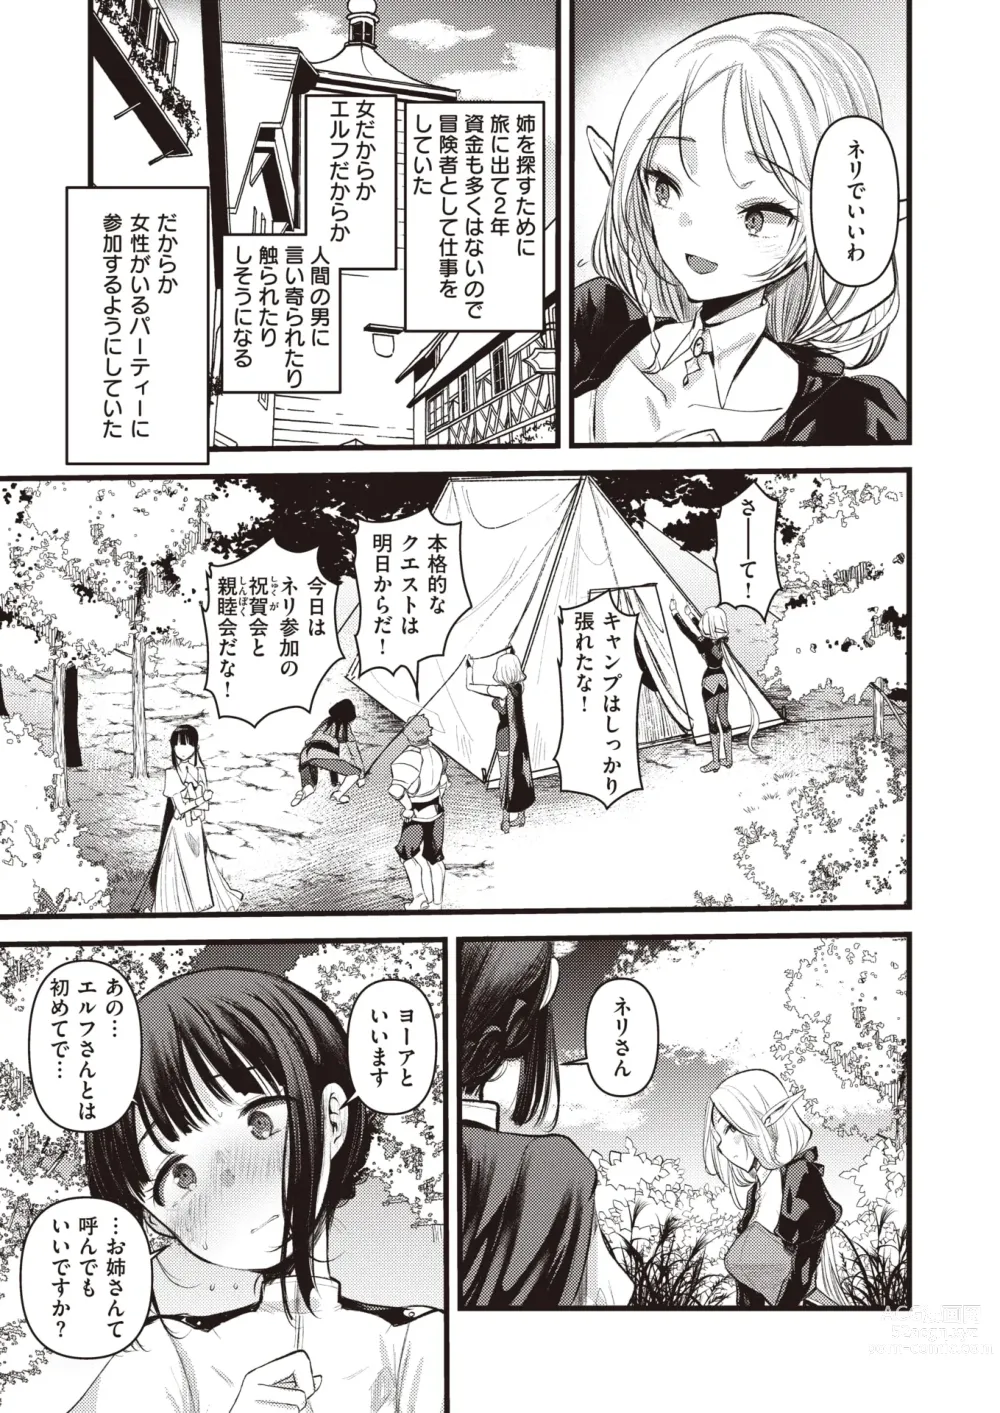 Page 70 of manga Isekai Rakuten Vol. 31